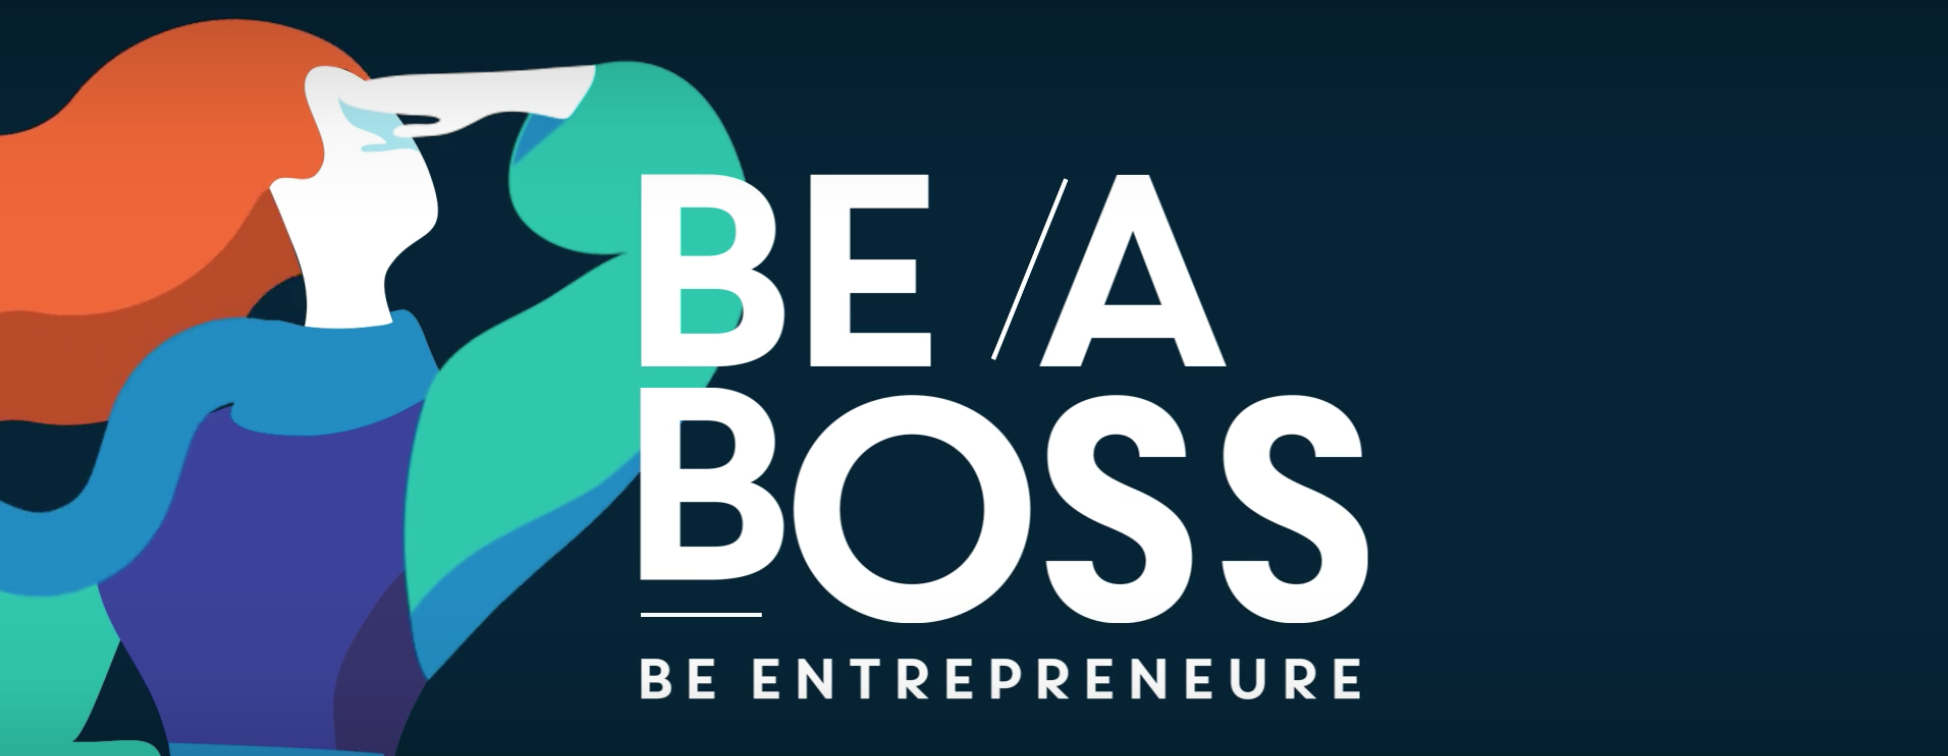 Be a boss